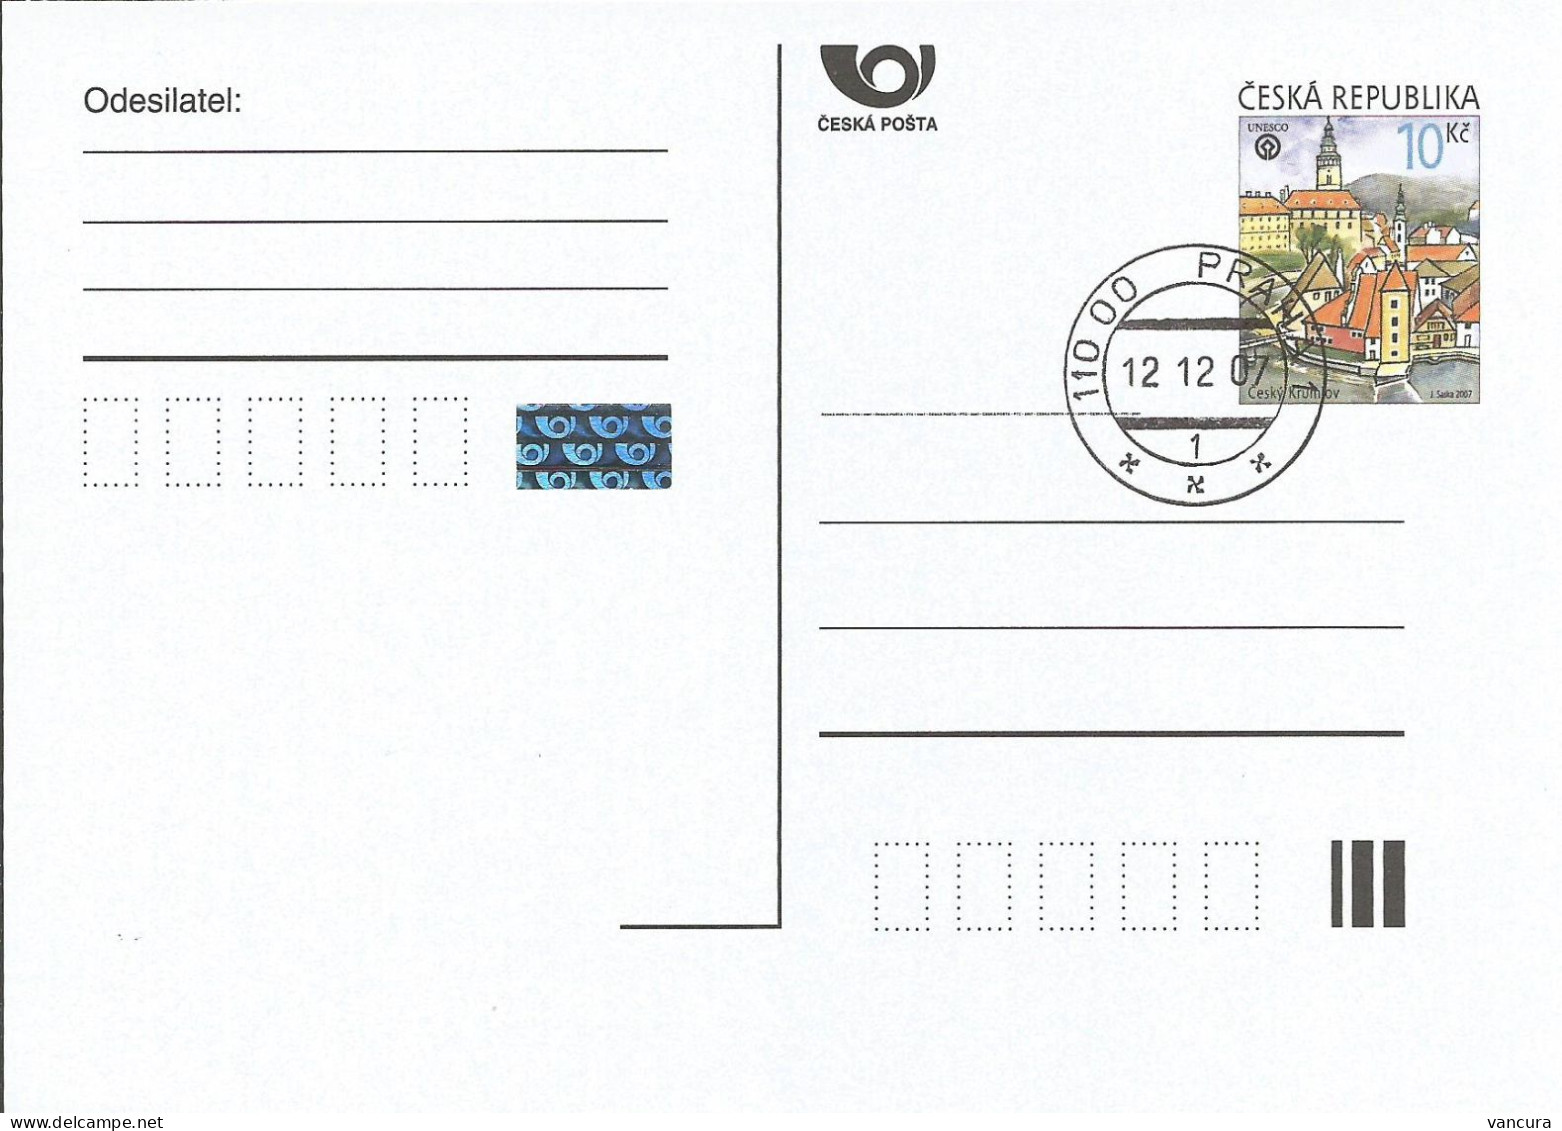 CDV 114 A Czech Republic - Cesky Krumlov 2007 - Postcards